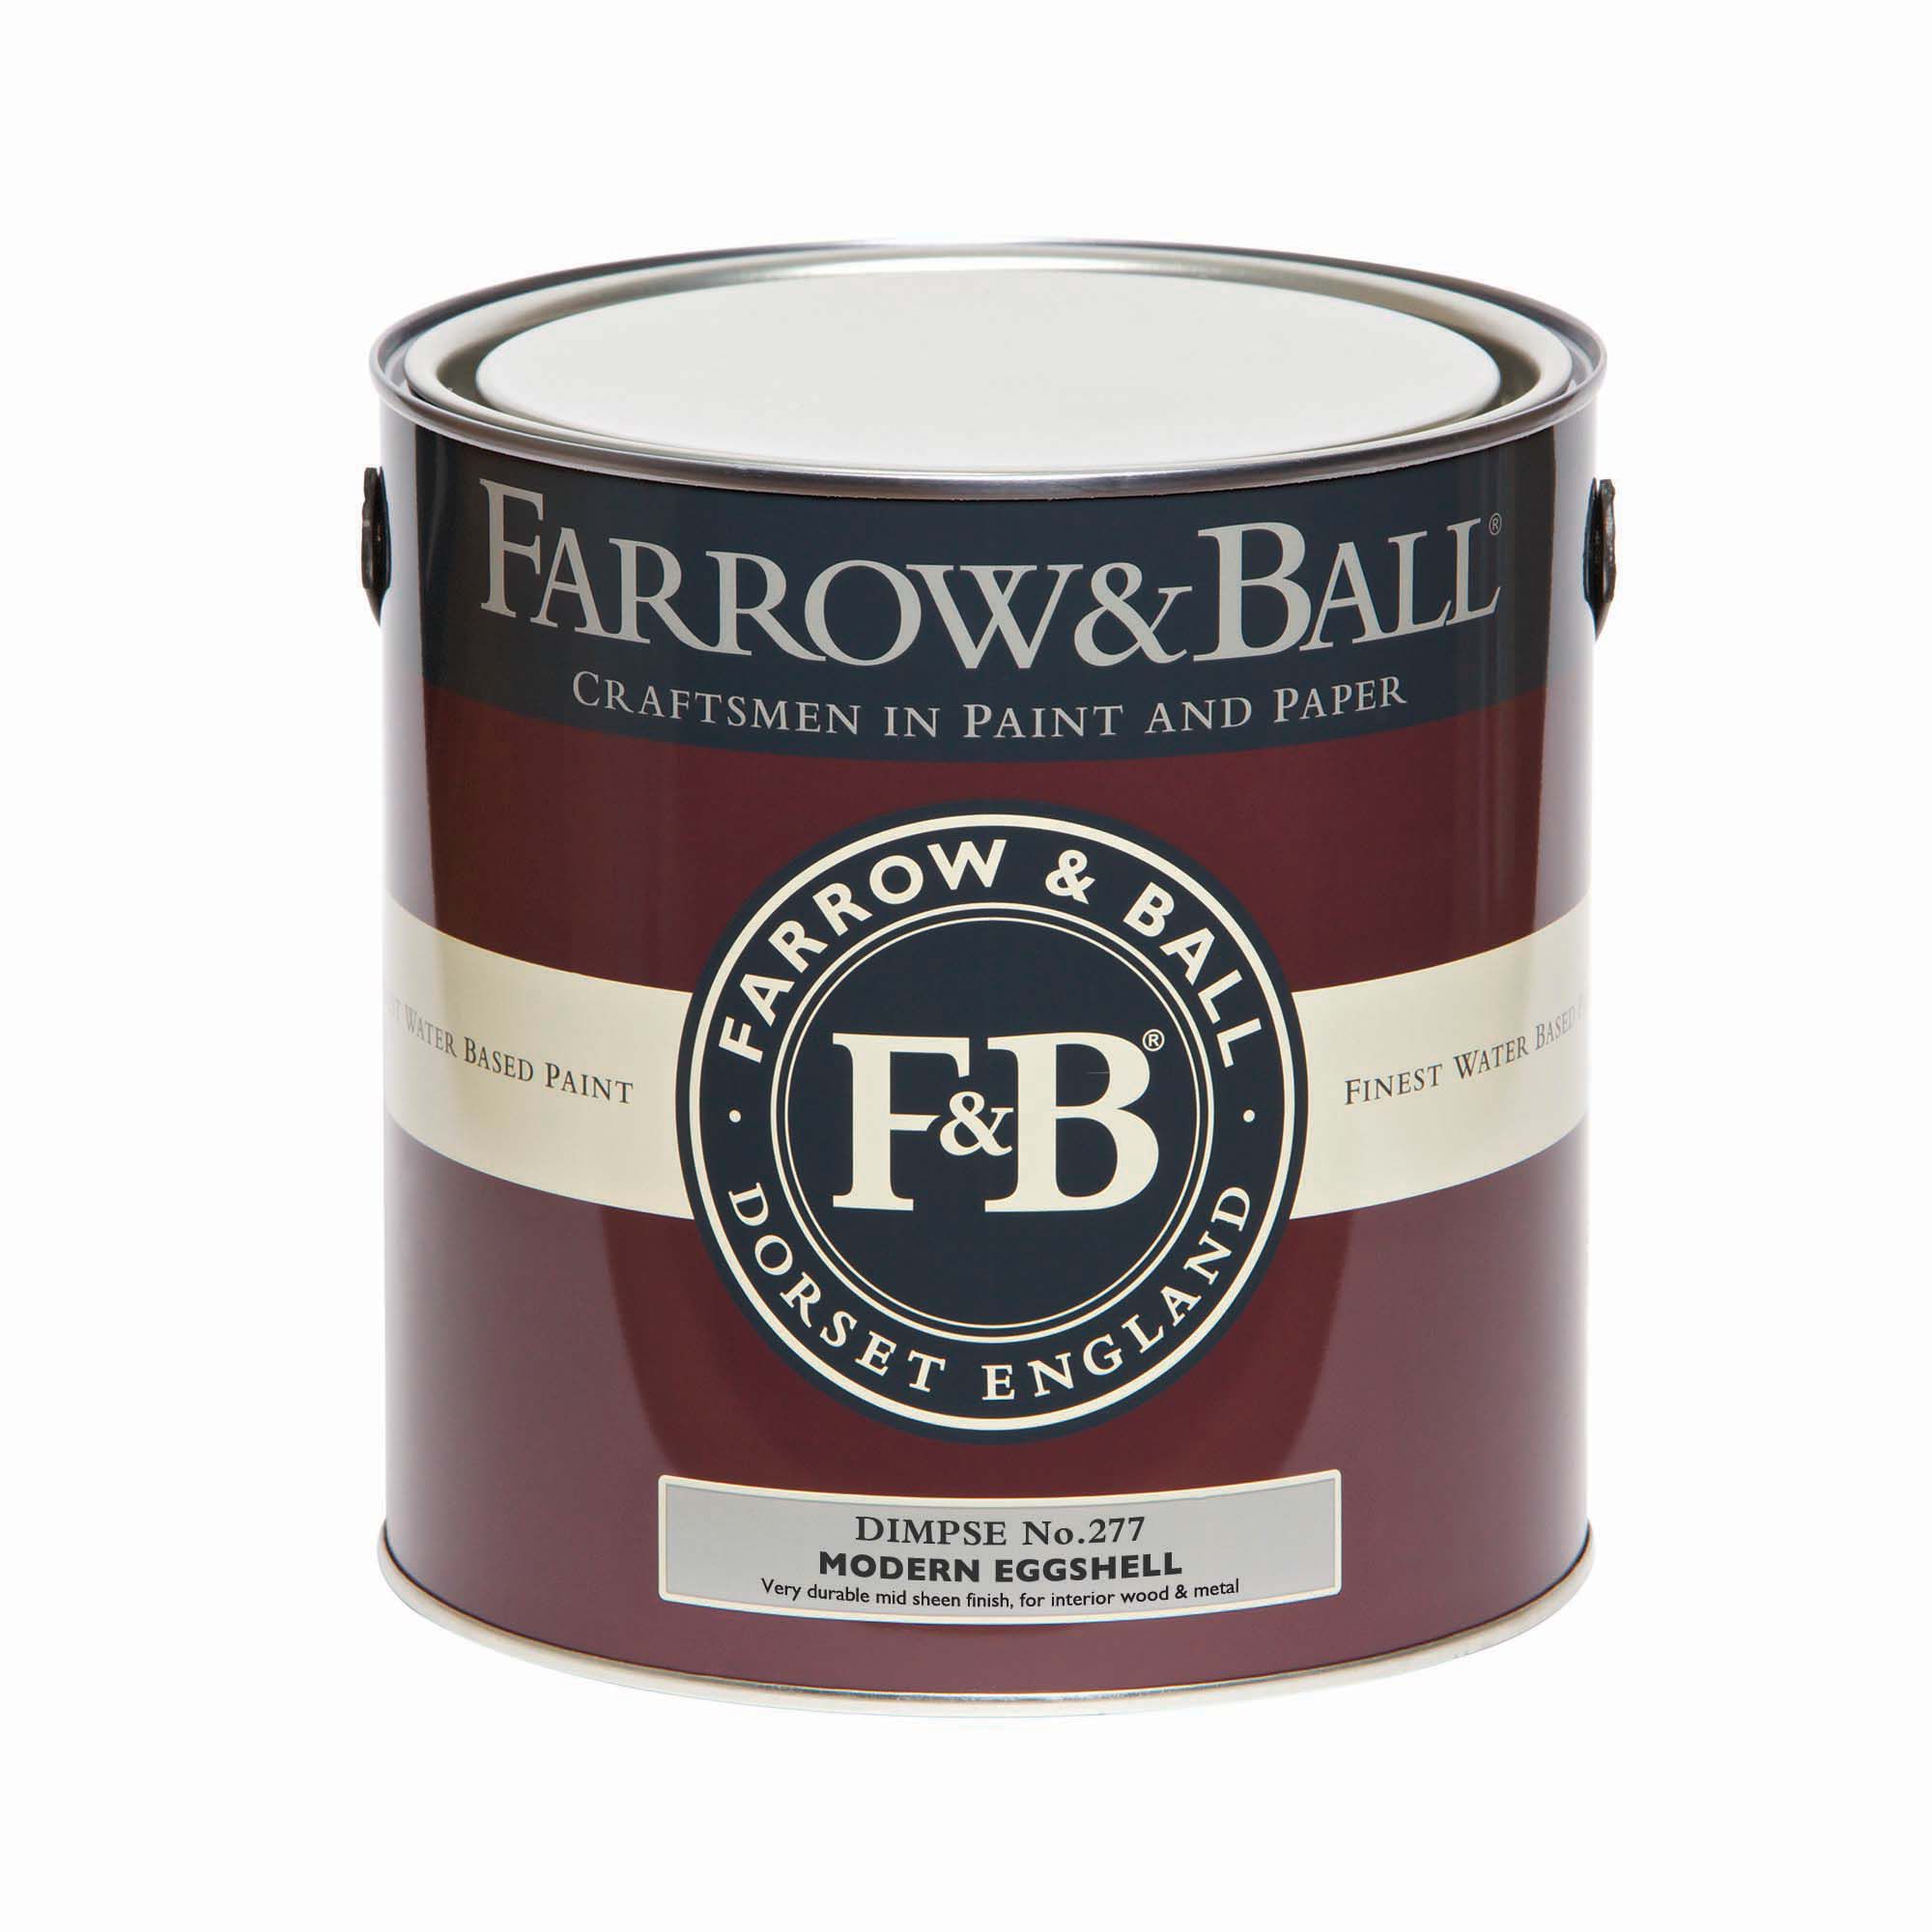 Farrow & Ball Modern Dimpse No.277 Eggshell Paint, 2.5L